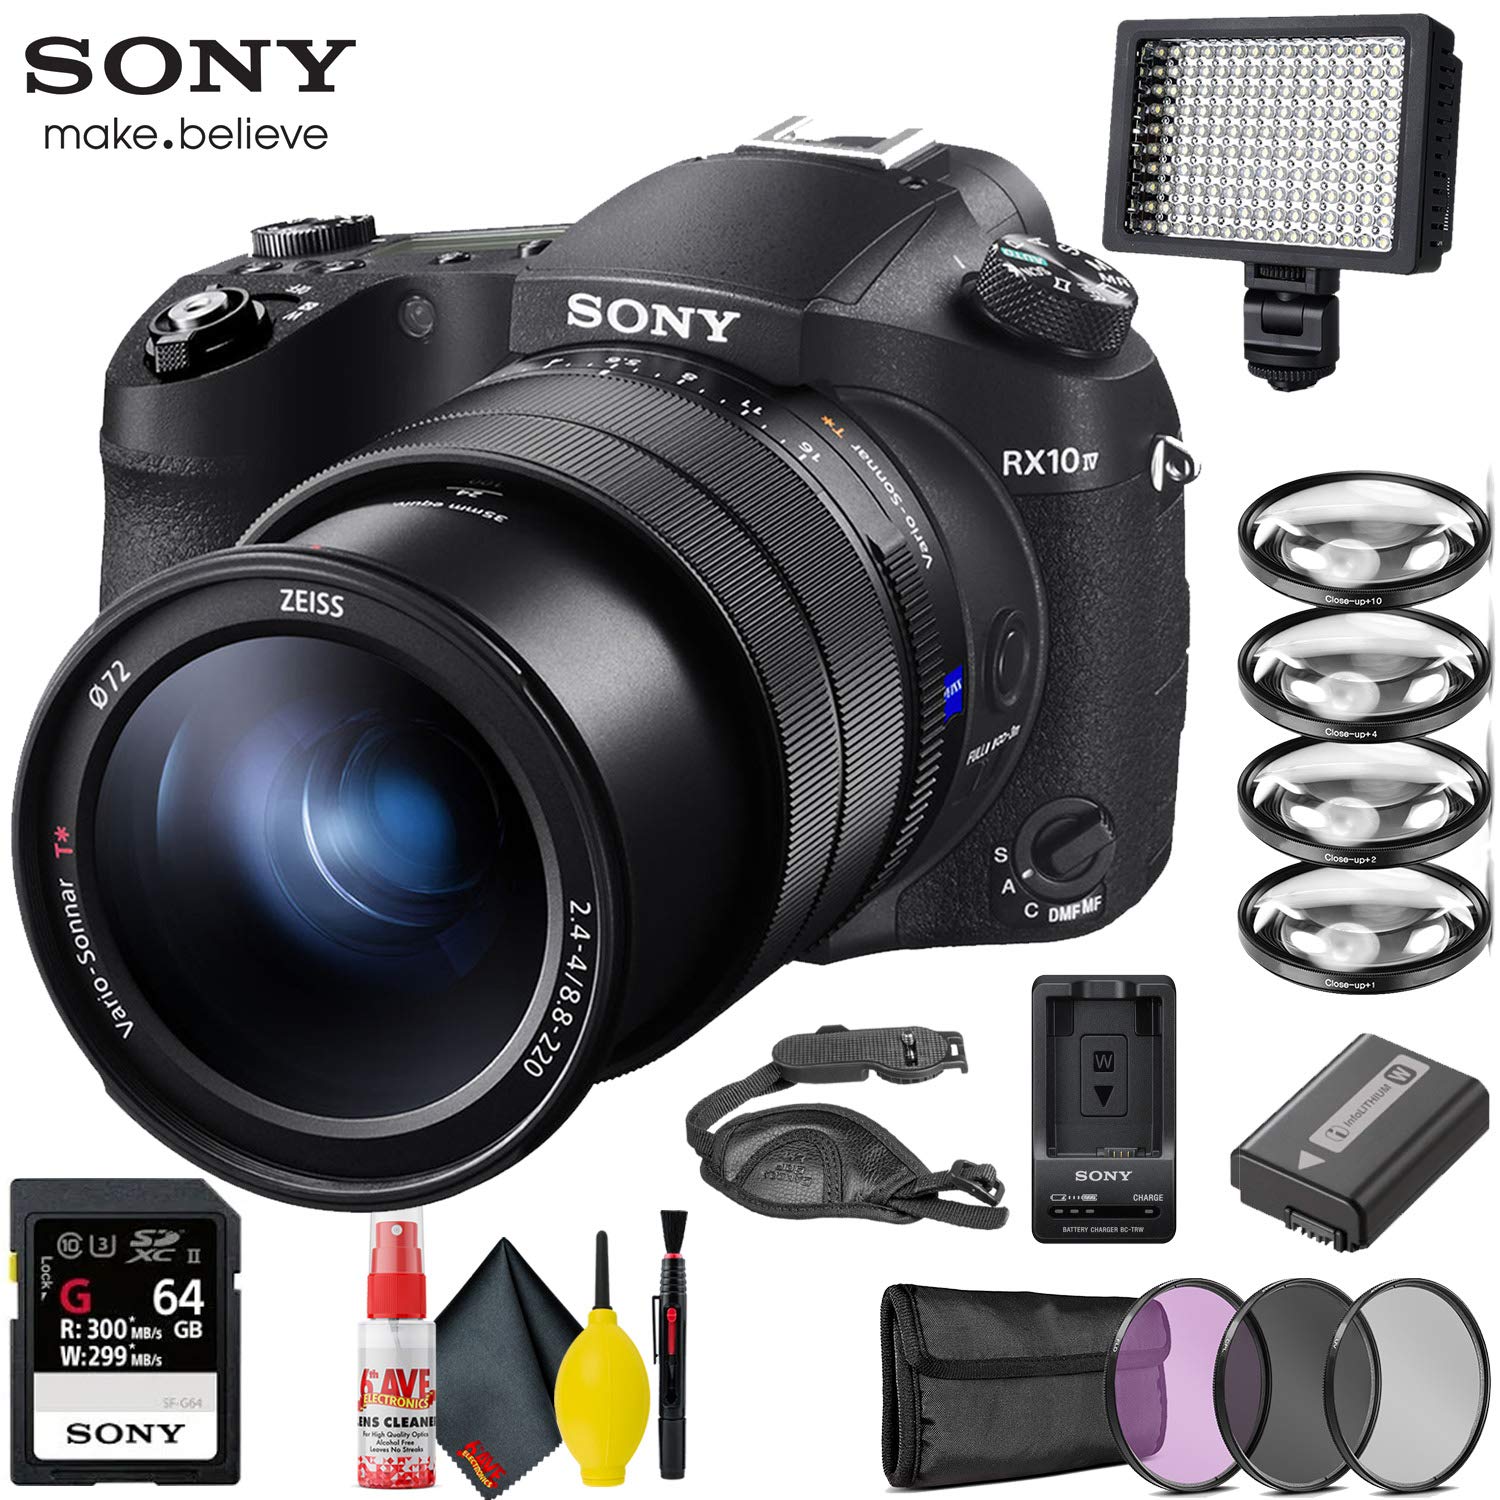 Sony RX10 IV Digital Camera DSC-RX10M4